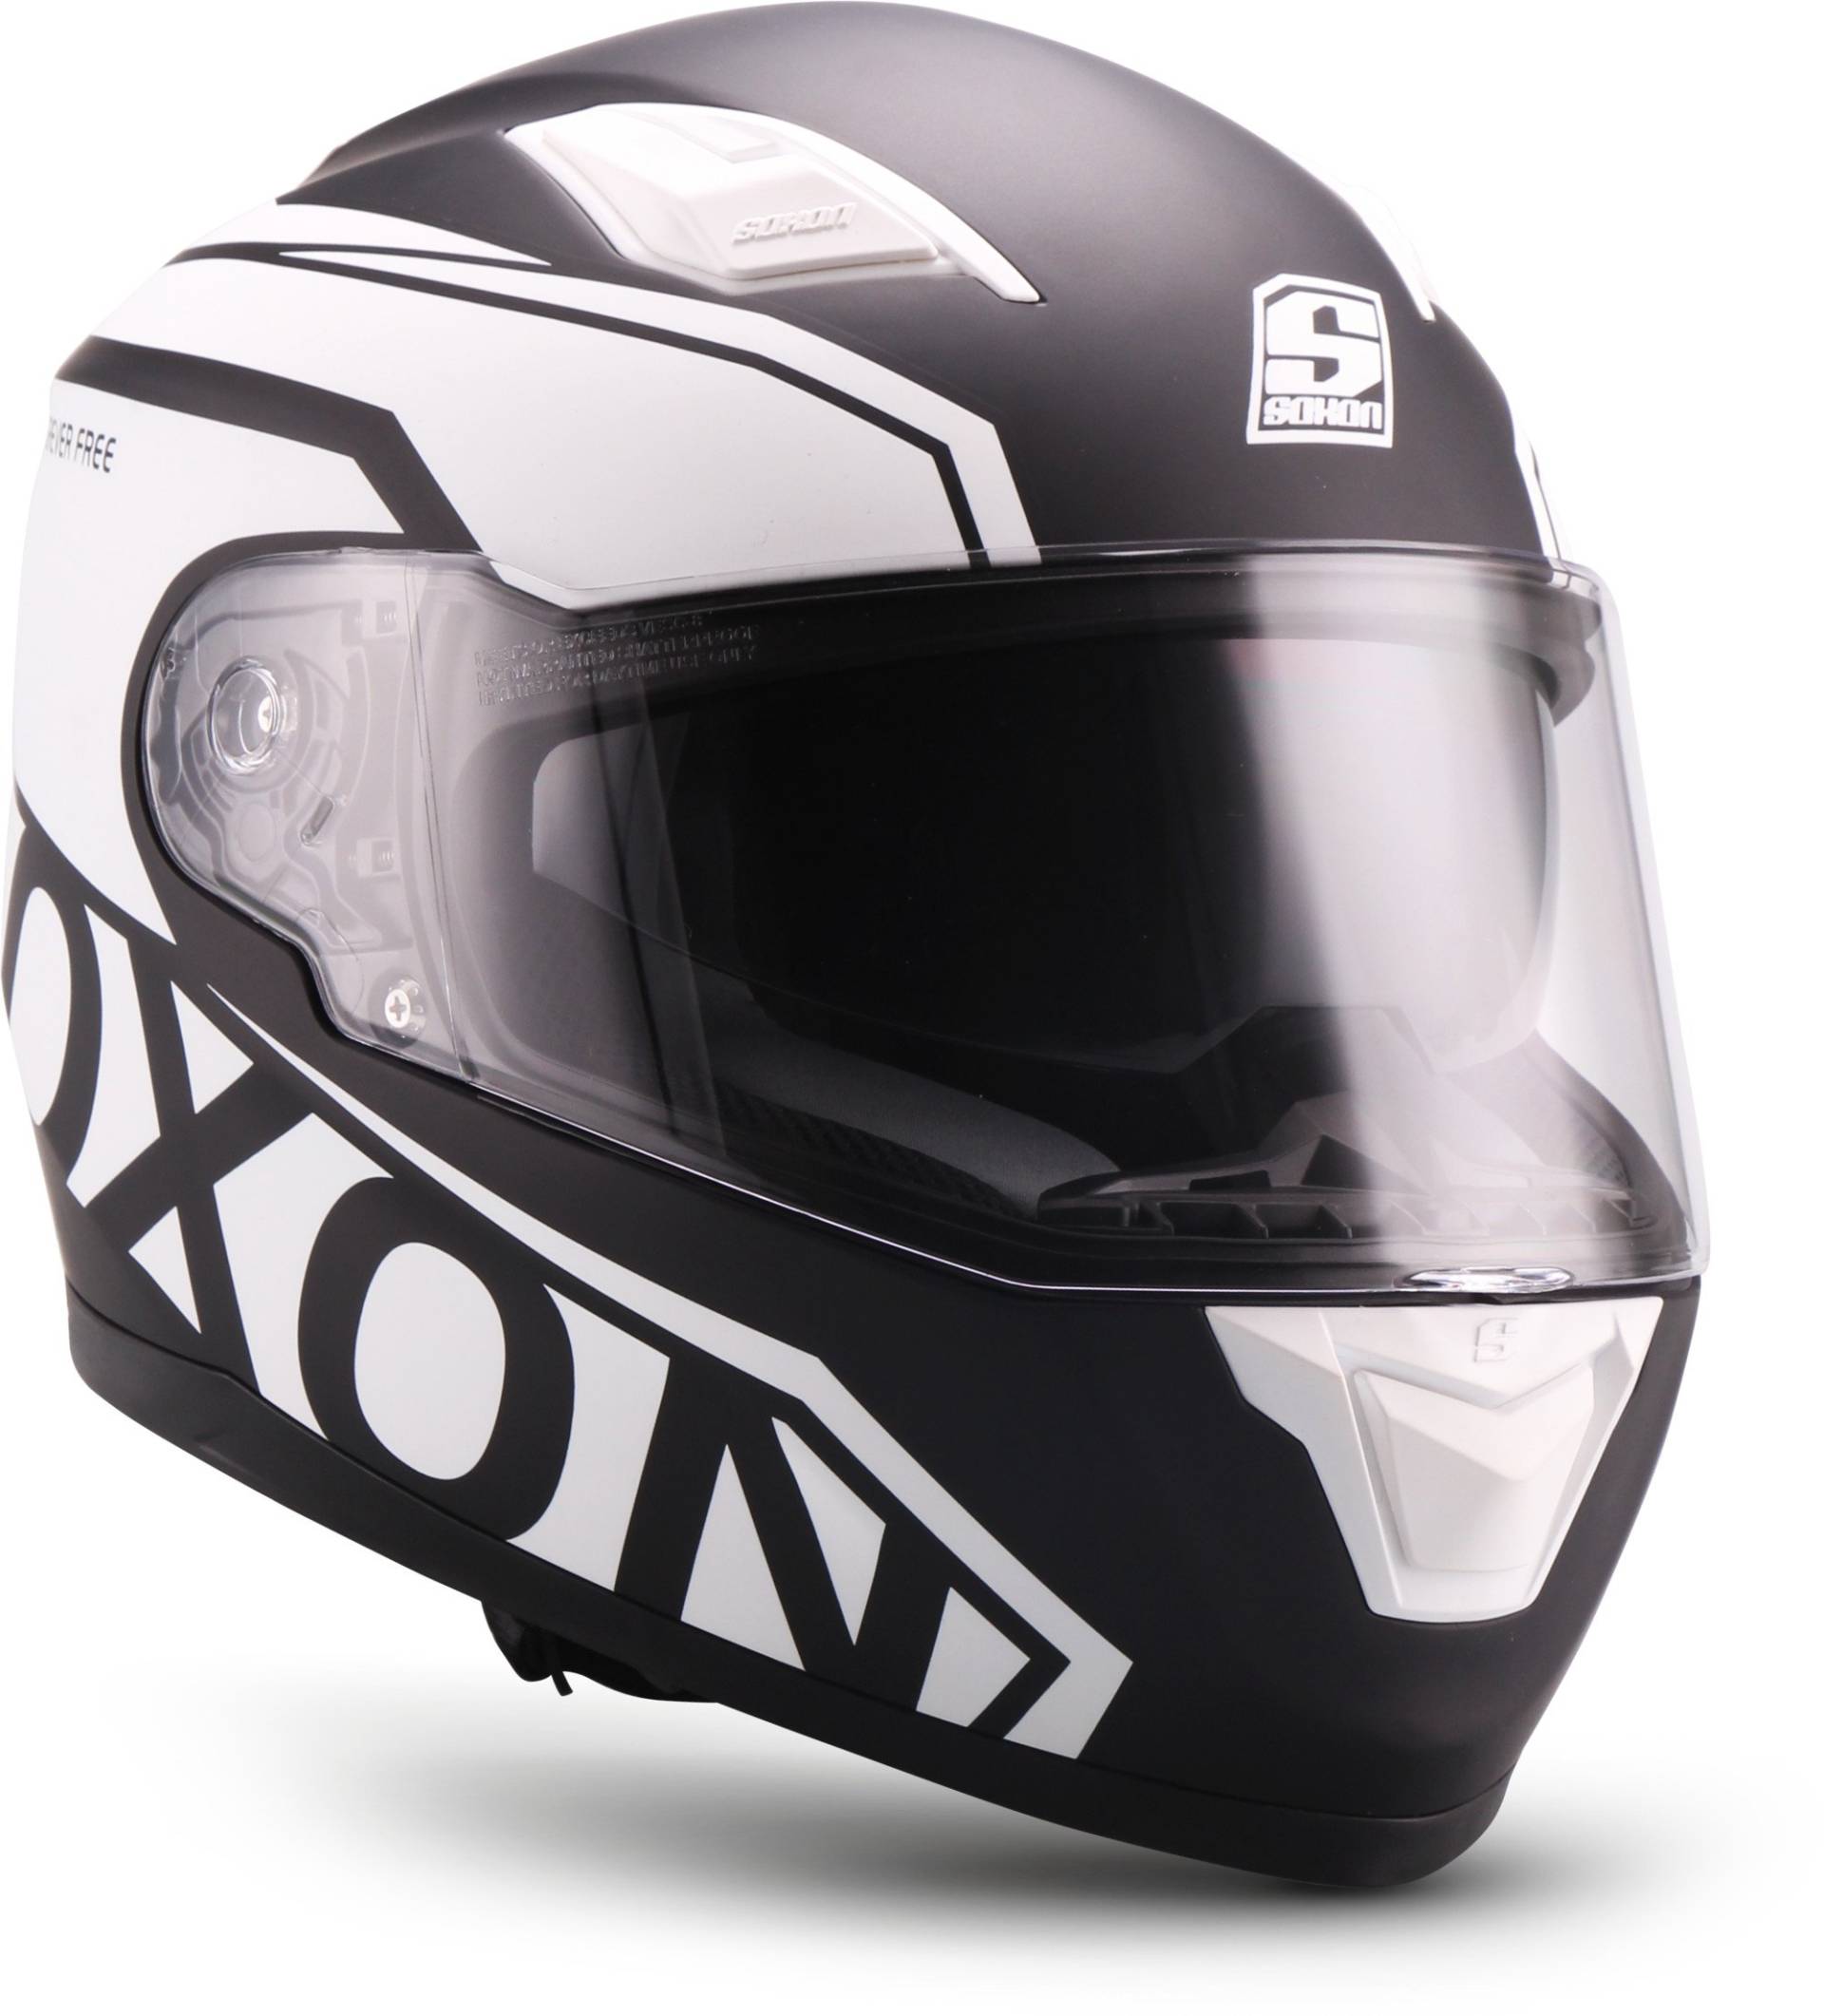 Soxon® ST-1000 Race „Black“ · Integral-Helm · Full-Face Motorrad-Helm Roller-Helm Scooter-Helm Cruiser Sturz-Helm Sport Urban · ECE 22.05 Sonnenvisier Schnellverschluss Tasche S (55-56cm) von Soxon